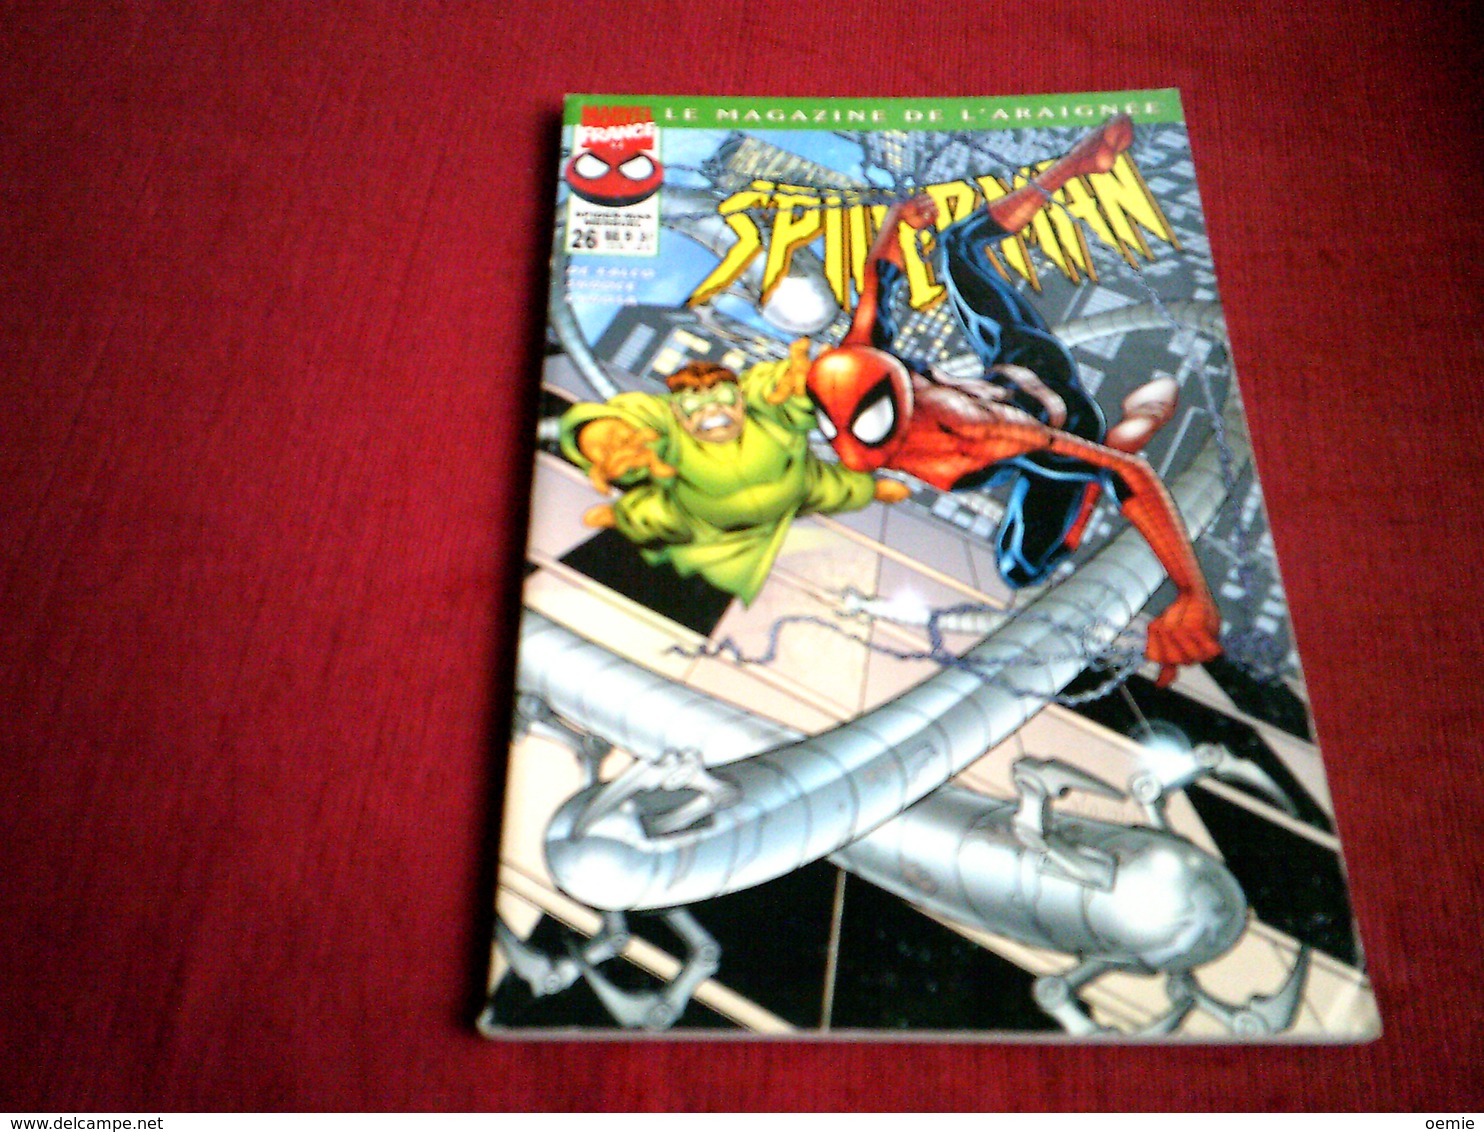 SPIDER MAN  LE MAGAZINE DE L'ARAIGNEE  N° 26   /  DE FALCO / SKROCE / LAROSA  /   MARS  1999 - Spiderman